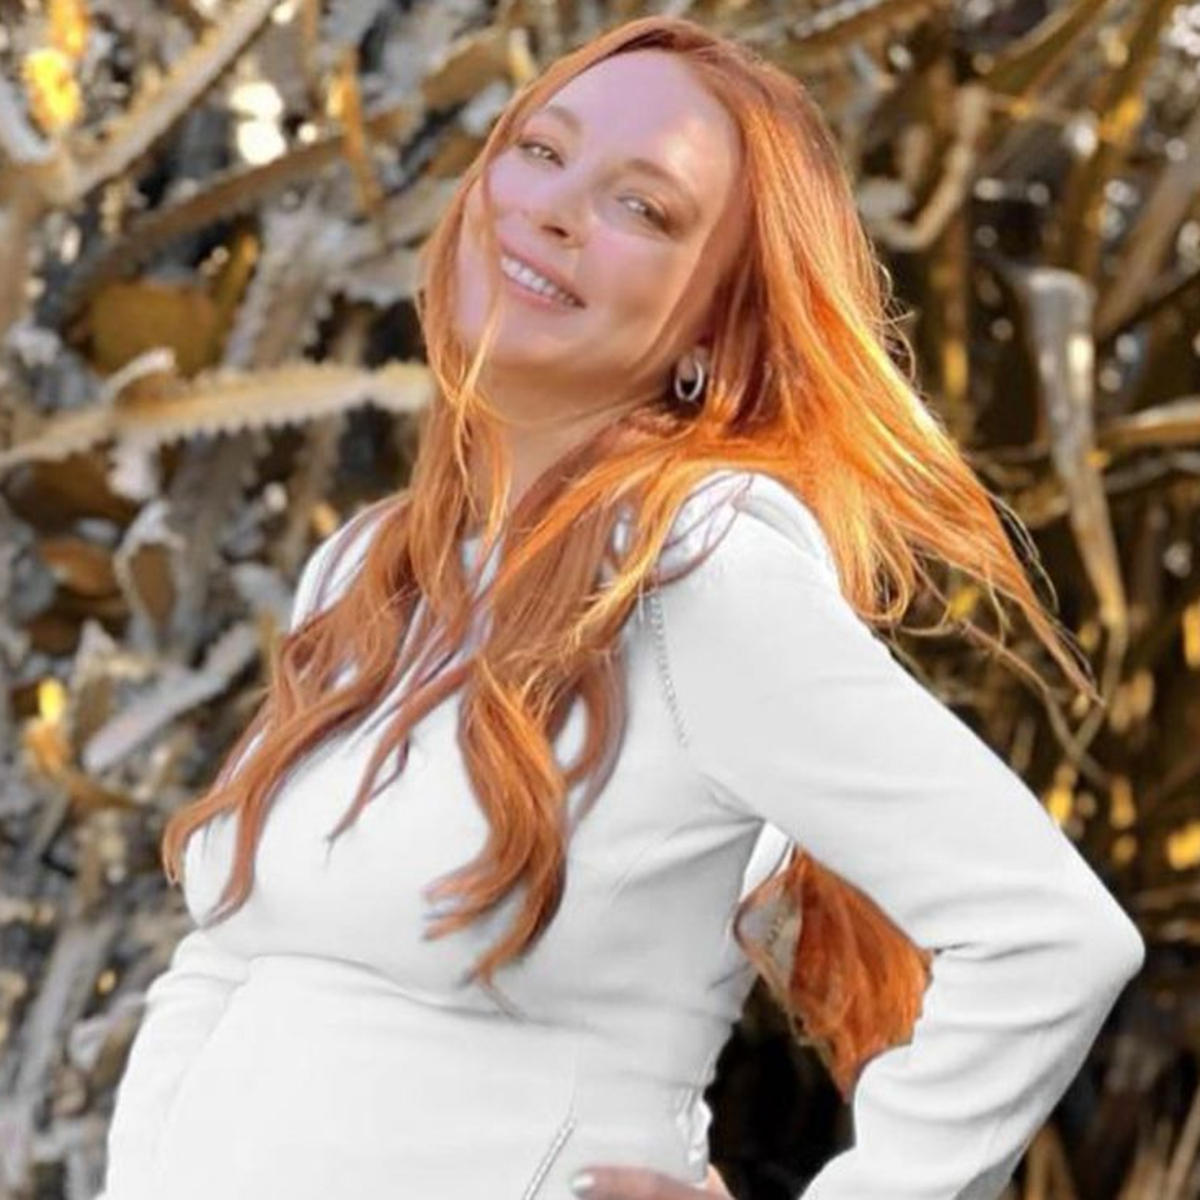 Pregnant Lindsay Lohan Shares New Selfie as She Turns 37